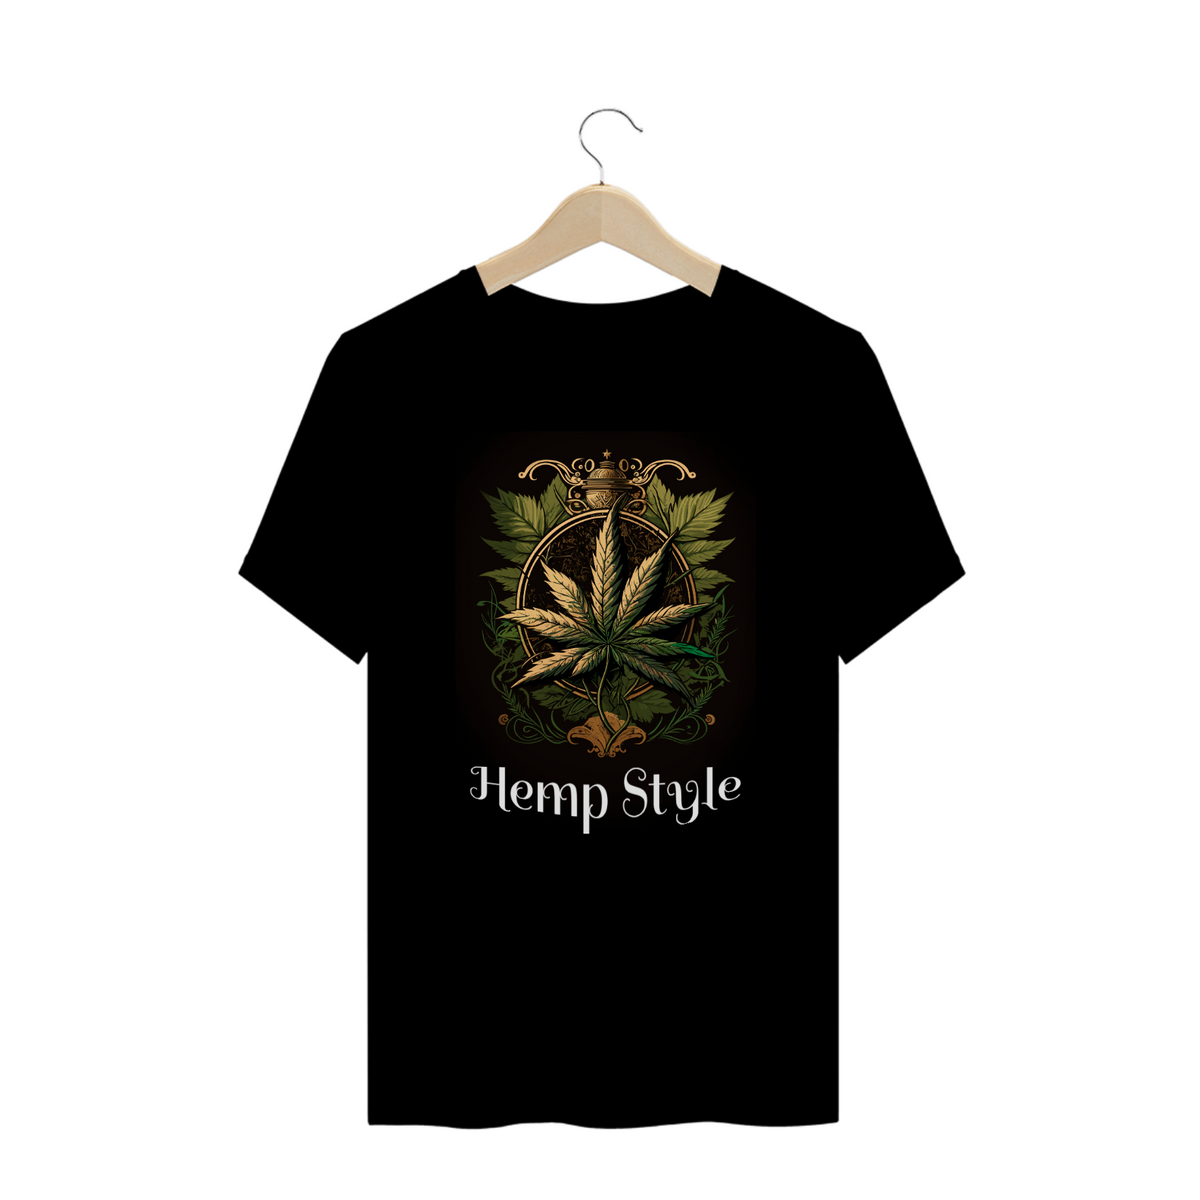 Nome do produto: Camiseta Hemp Style